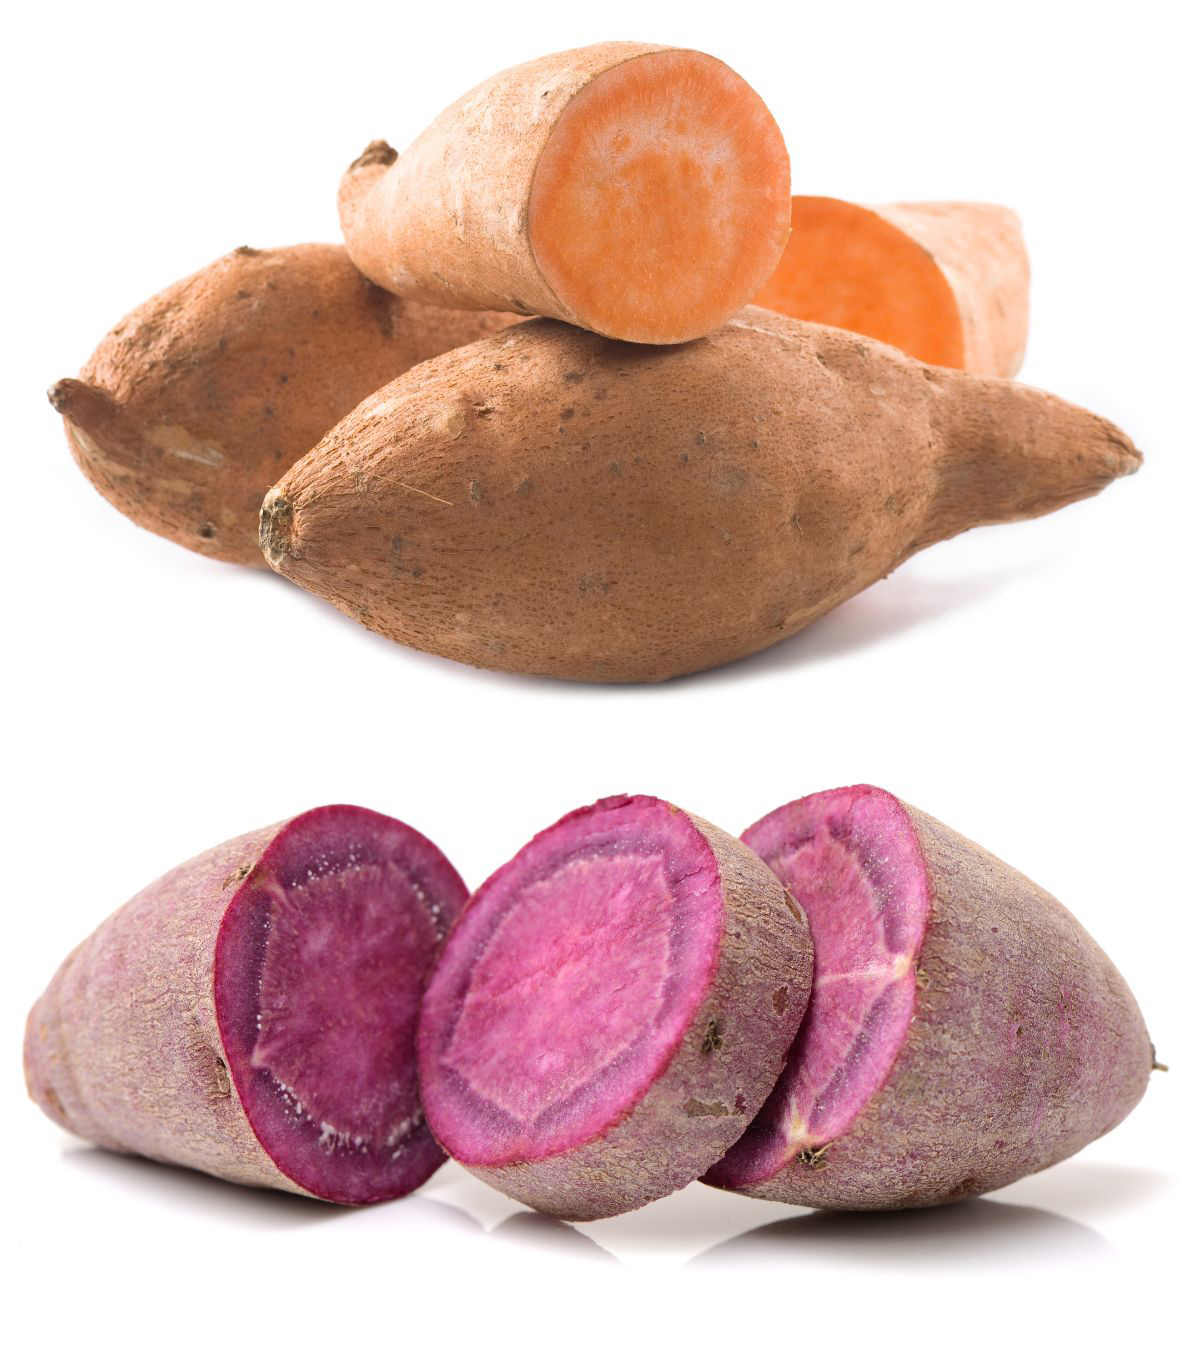 purple and orange sweet potatoes